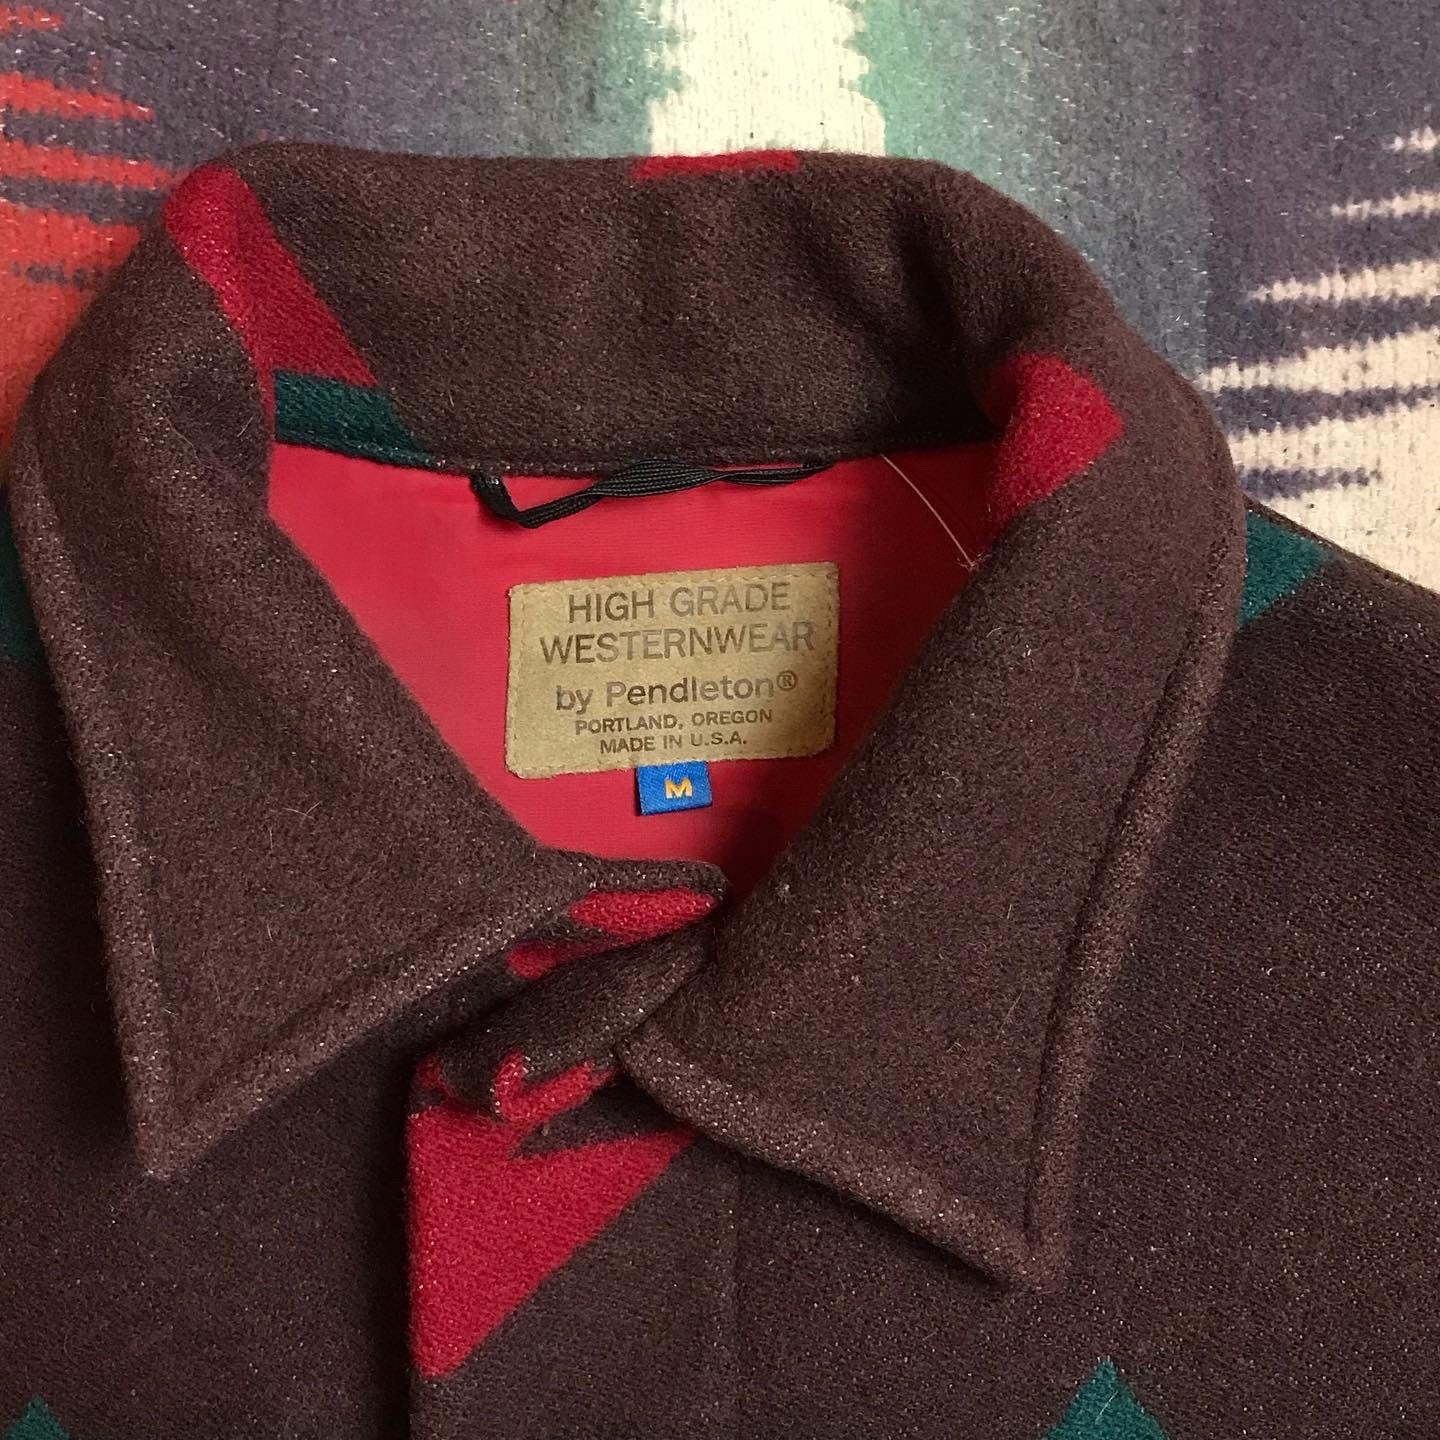 1980s/1990s Pendleton High Grade Western Wear Southwestern Wool Jacket Made in USA Size M/L